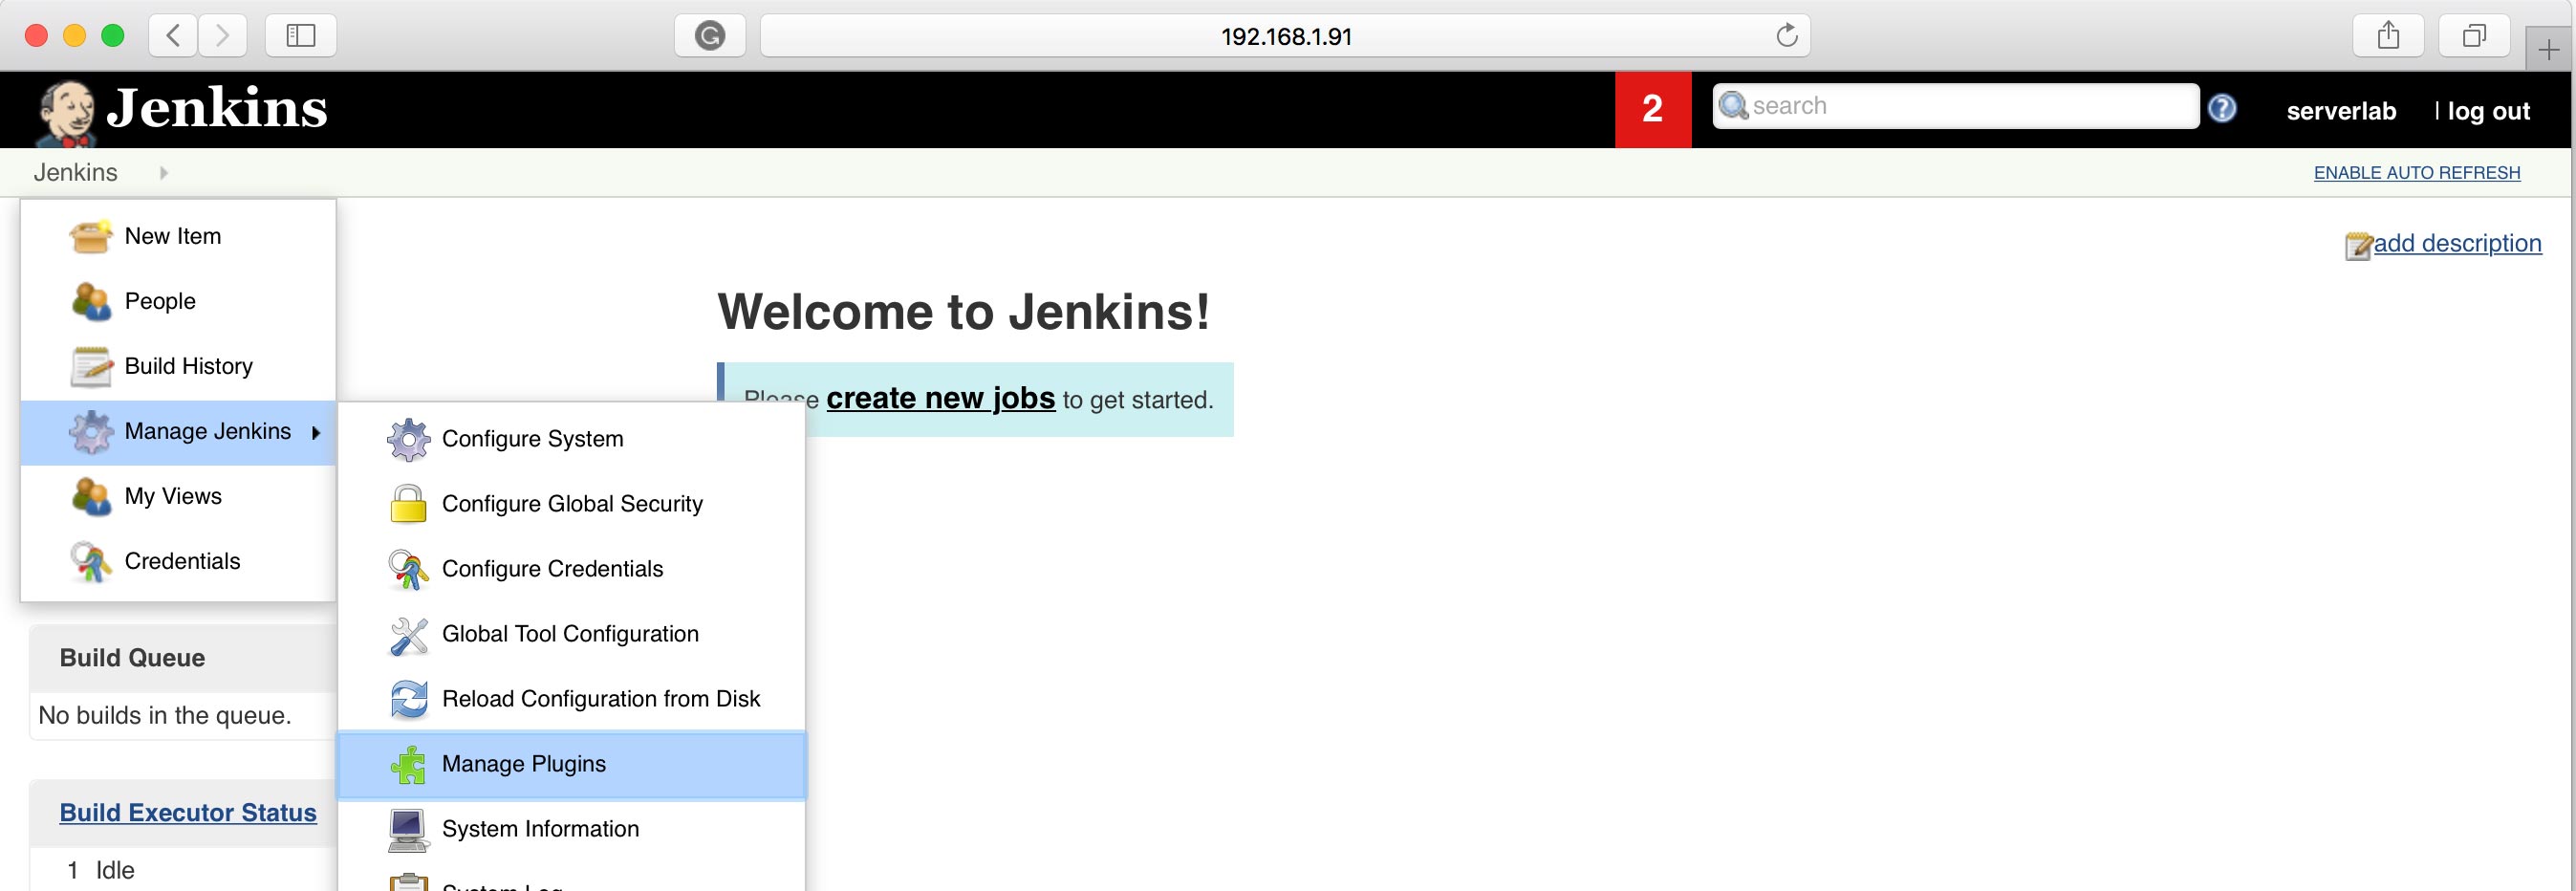 Jenkins - Manage Plugins menu item